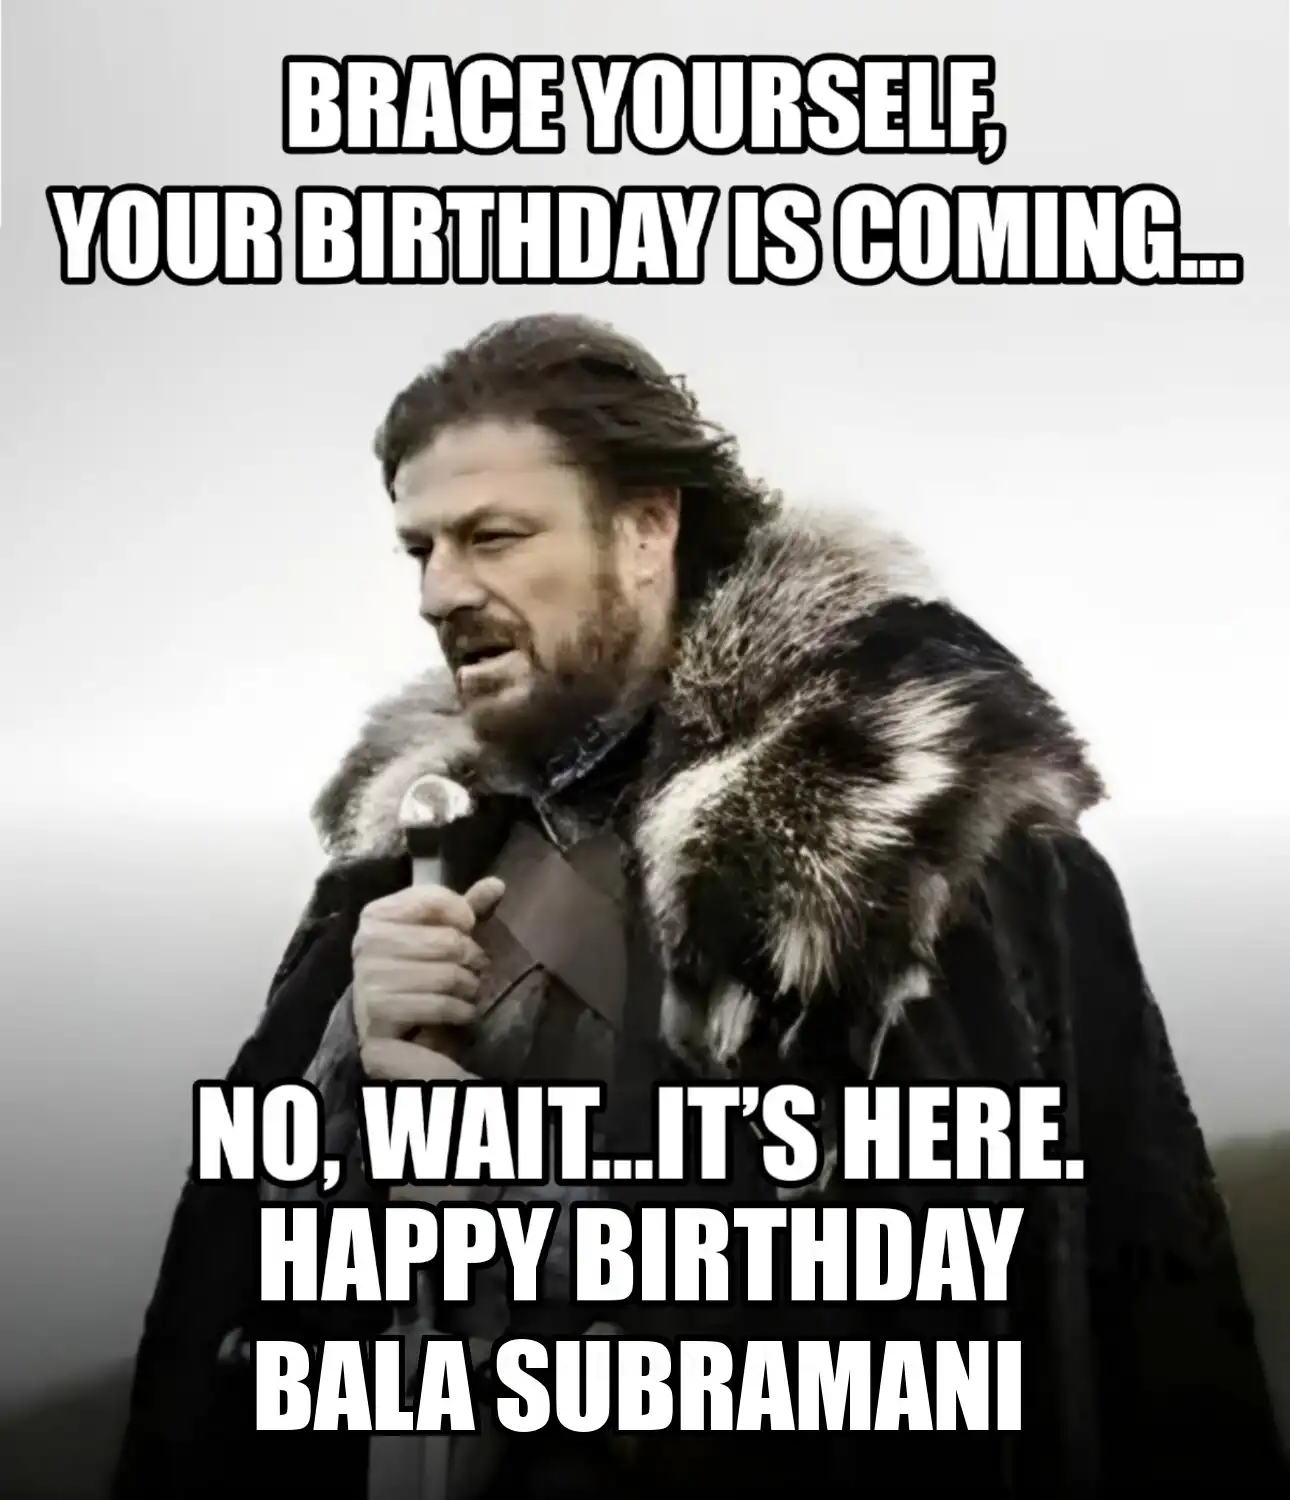 Happy Birthday Bala Subramani Brace Yourself Your Birthday Is Coming Meme